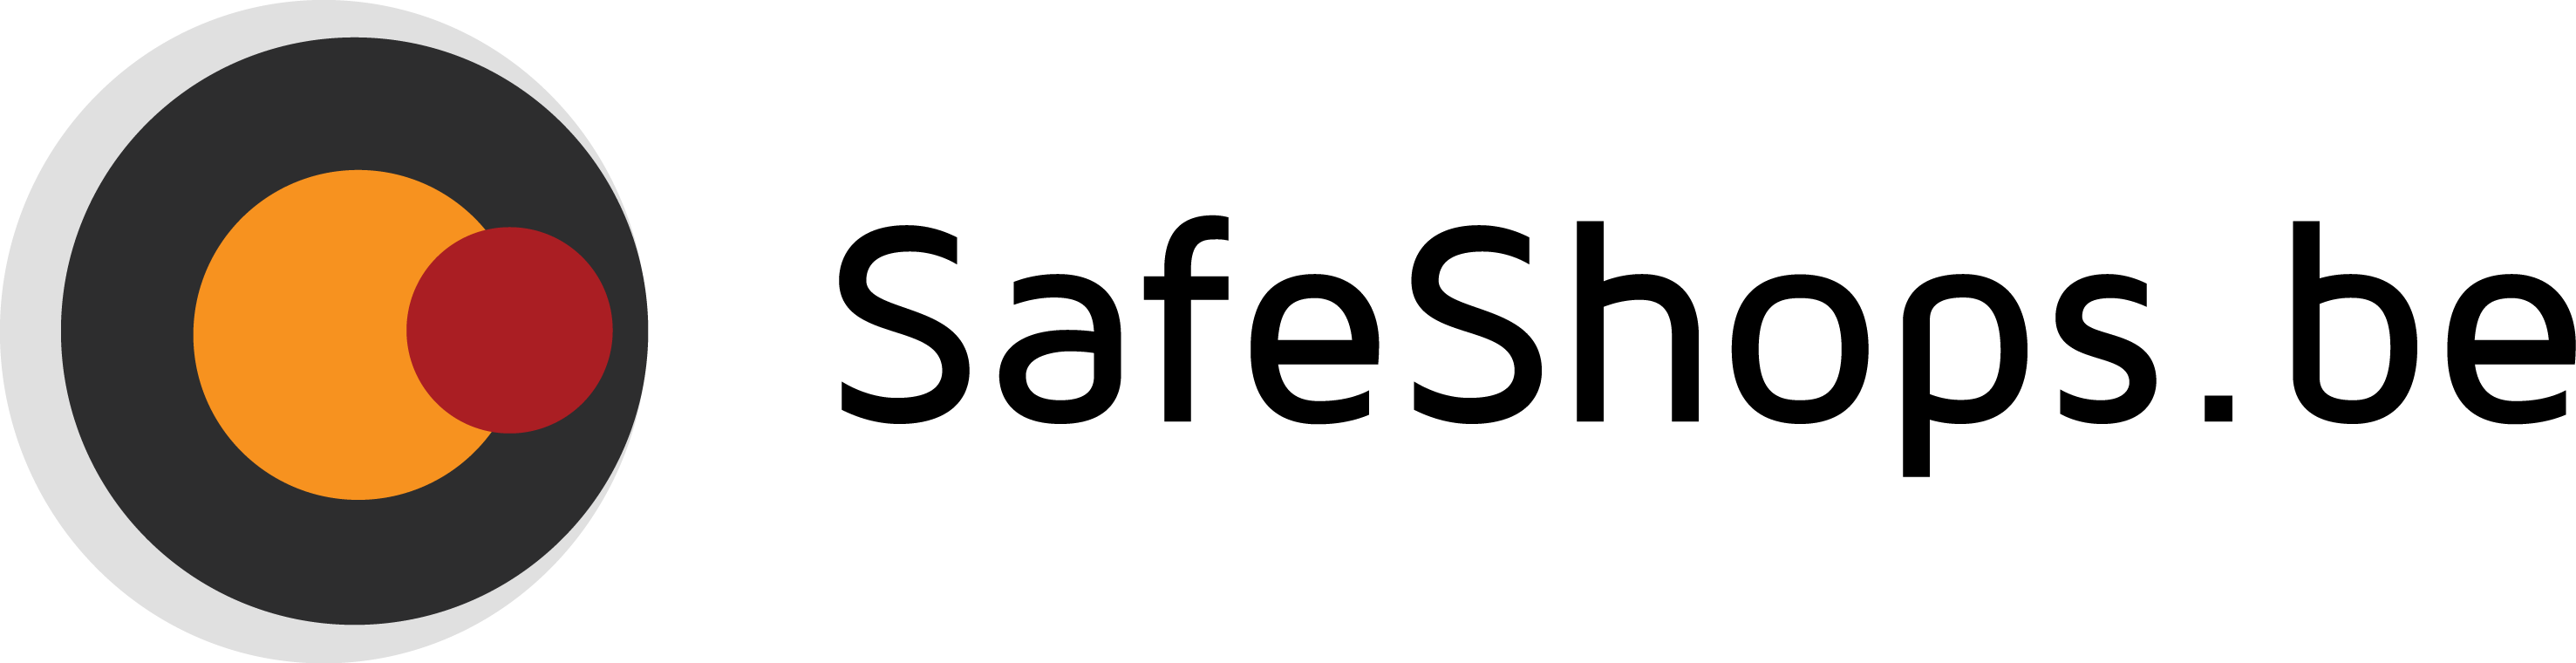 Safeshops